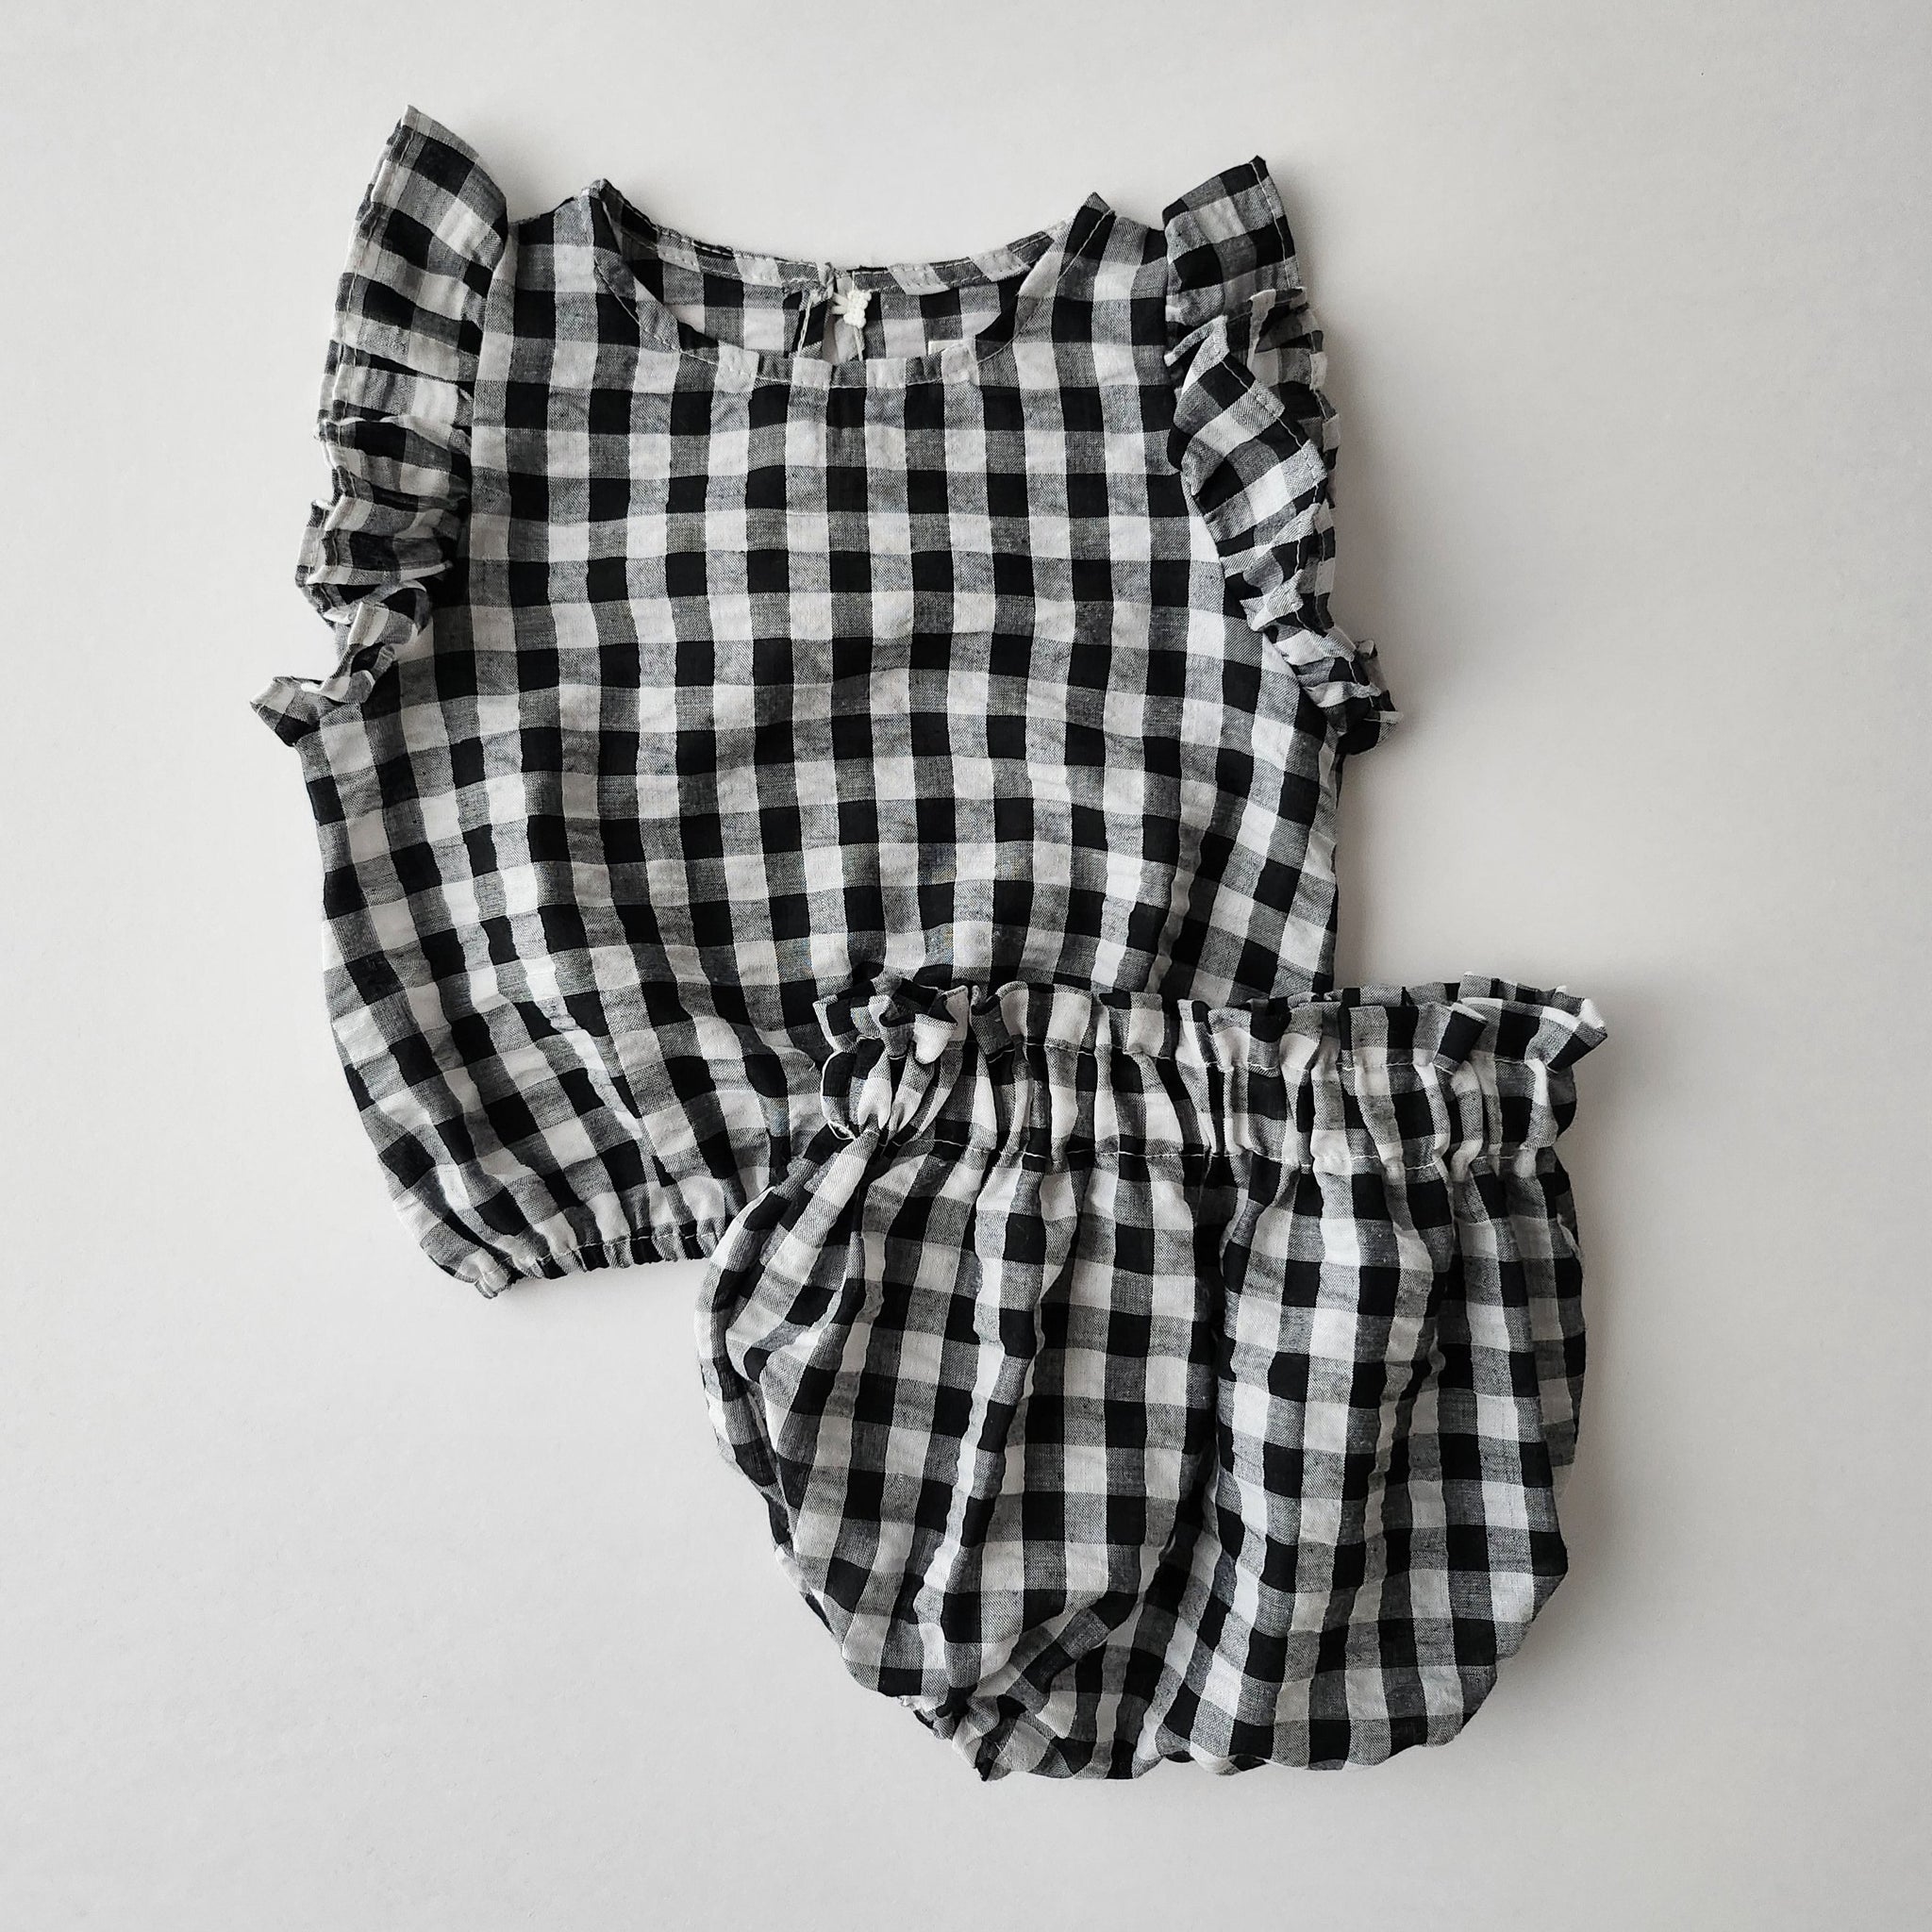 Baby Gingham Ruffle Short Sleeve Top and Bloomer Shorts Set (4-14m) - Black